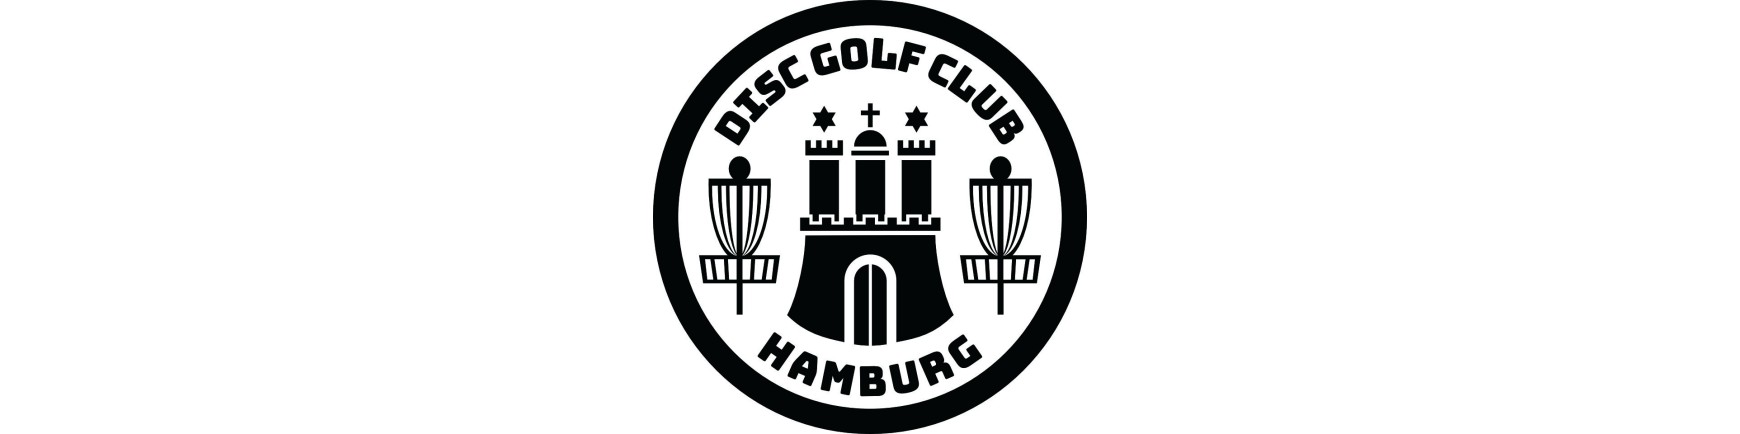 Disc Golf Club Hamburg